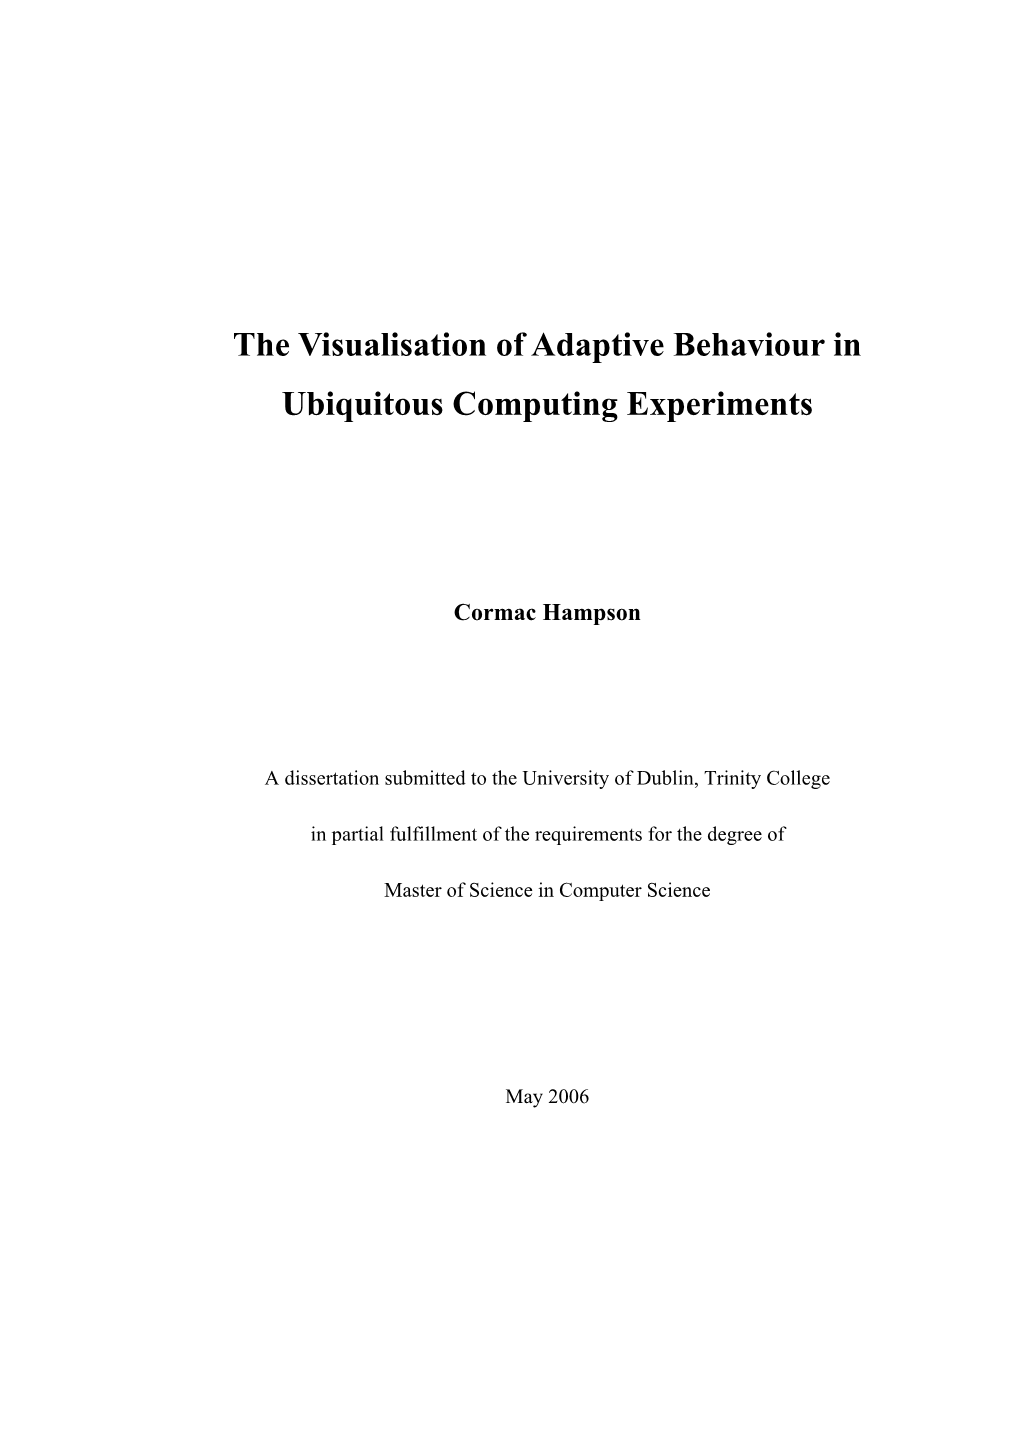 The Visualisation of Adaptive Behaviour in Ubiquitous Computing Experiments